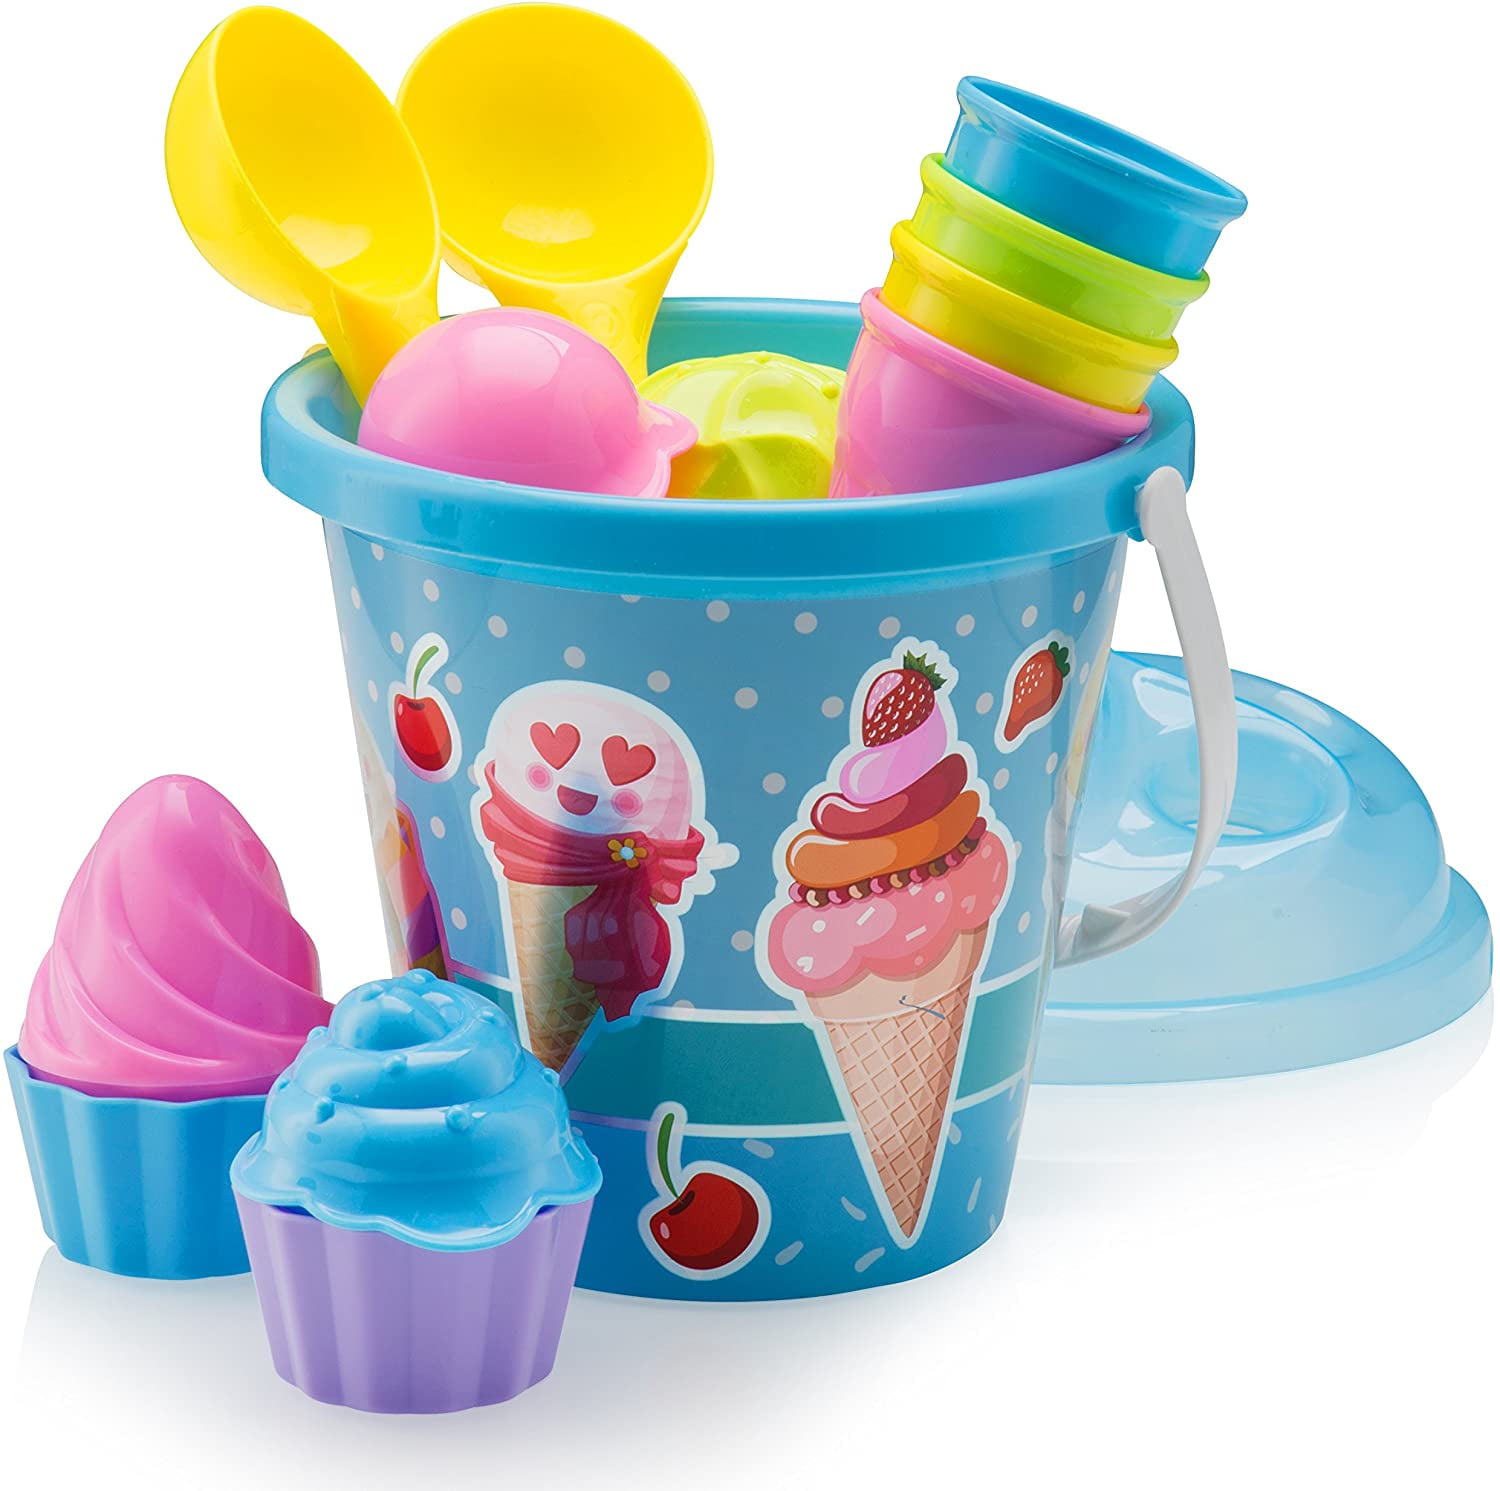 16 Toy Cupcakes Children Pretend Play Kitchen & Shop Mould Set bath pool Sandpit 